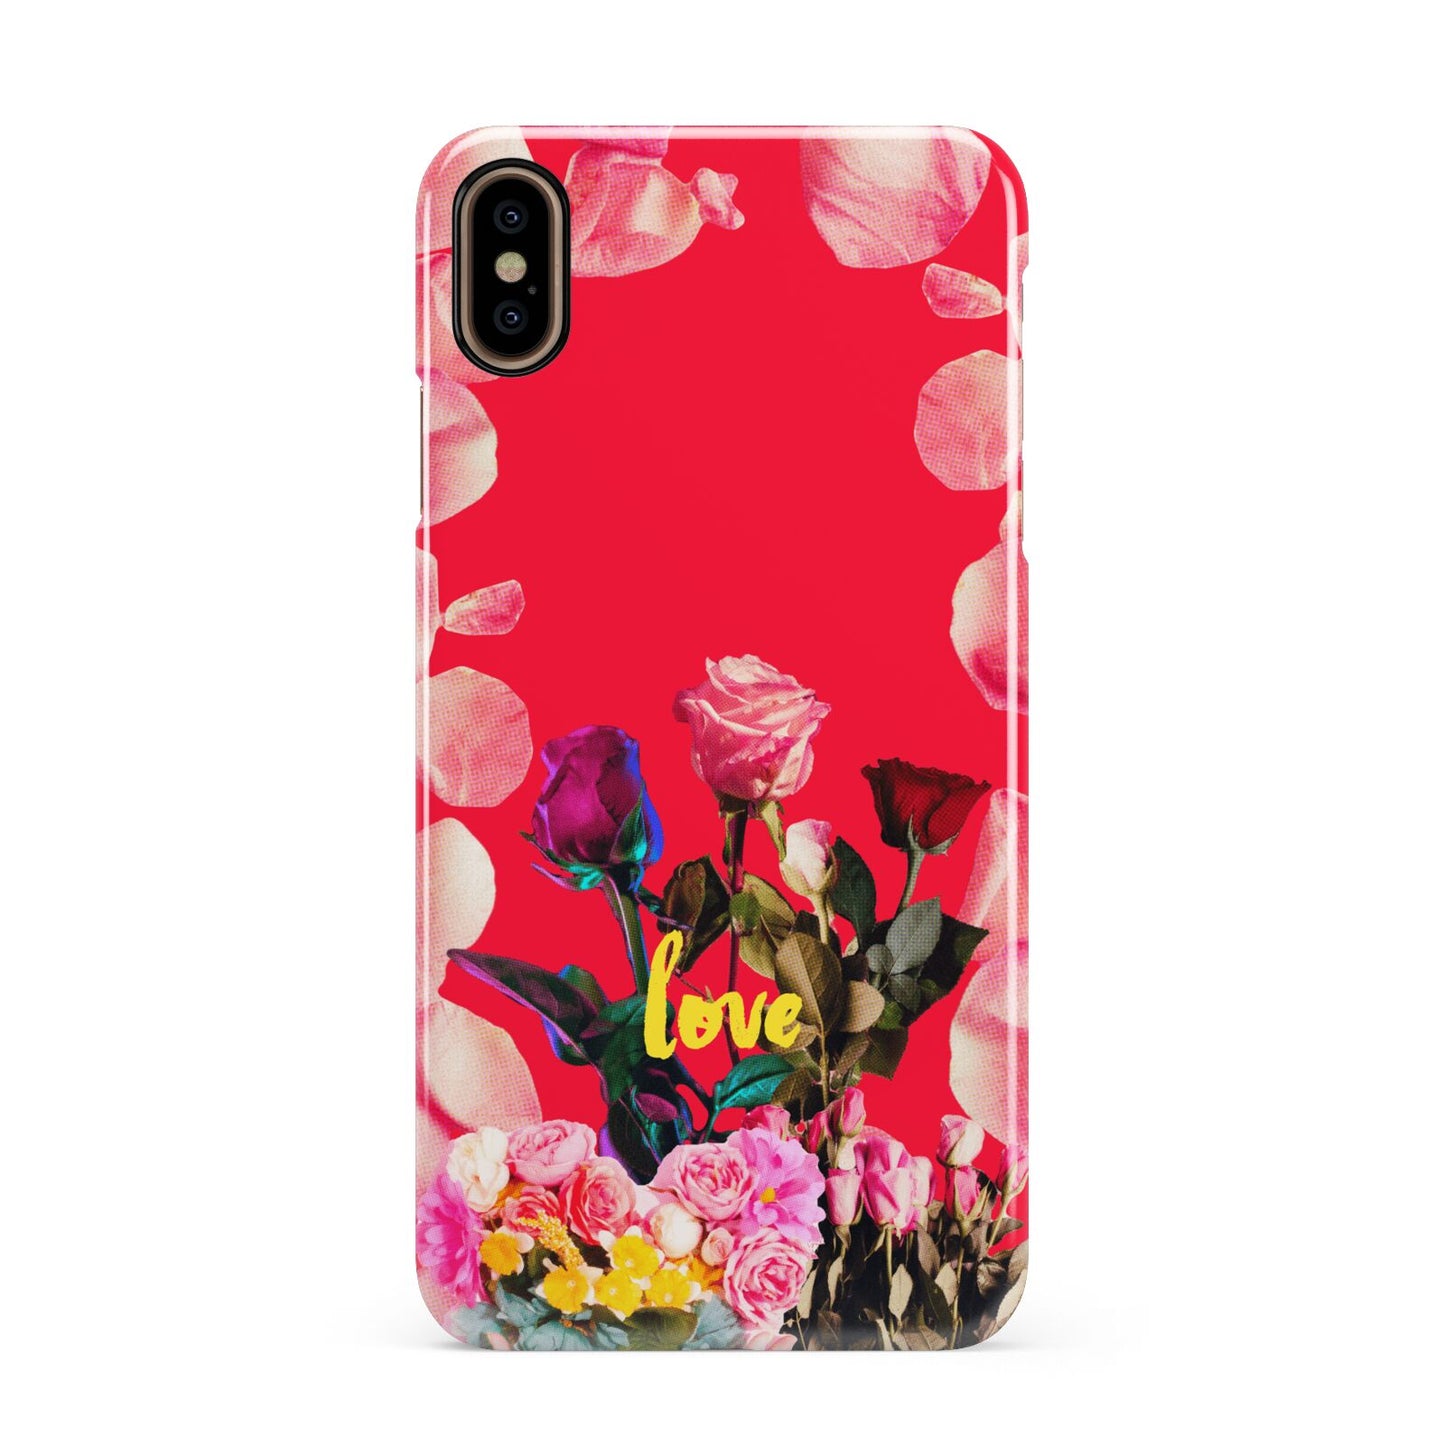 Retro Floral Valentine Apple iPhone Xs Max 3D Snap Case